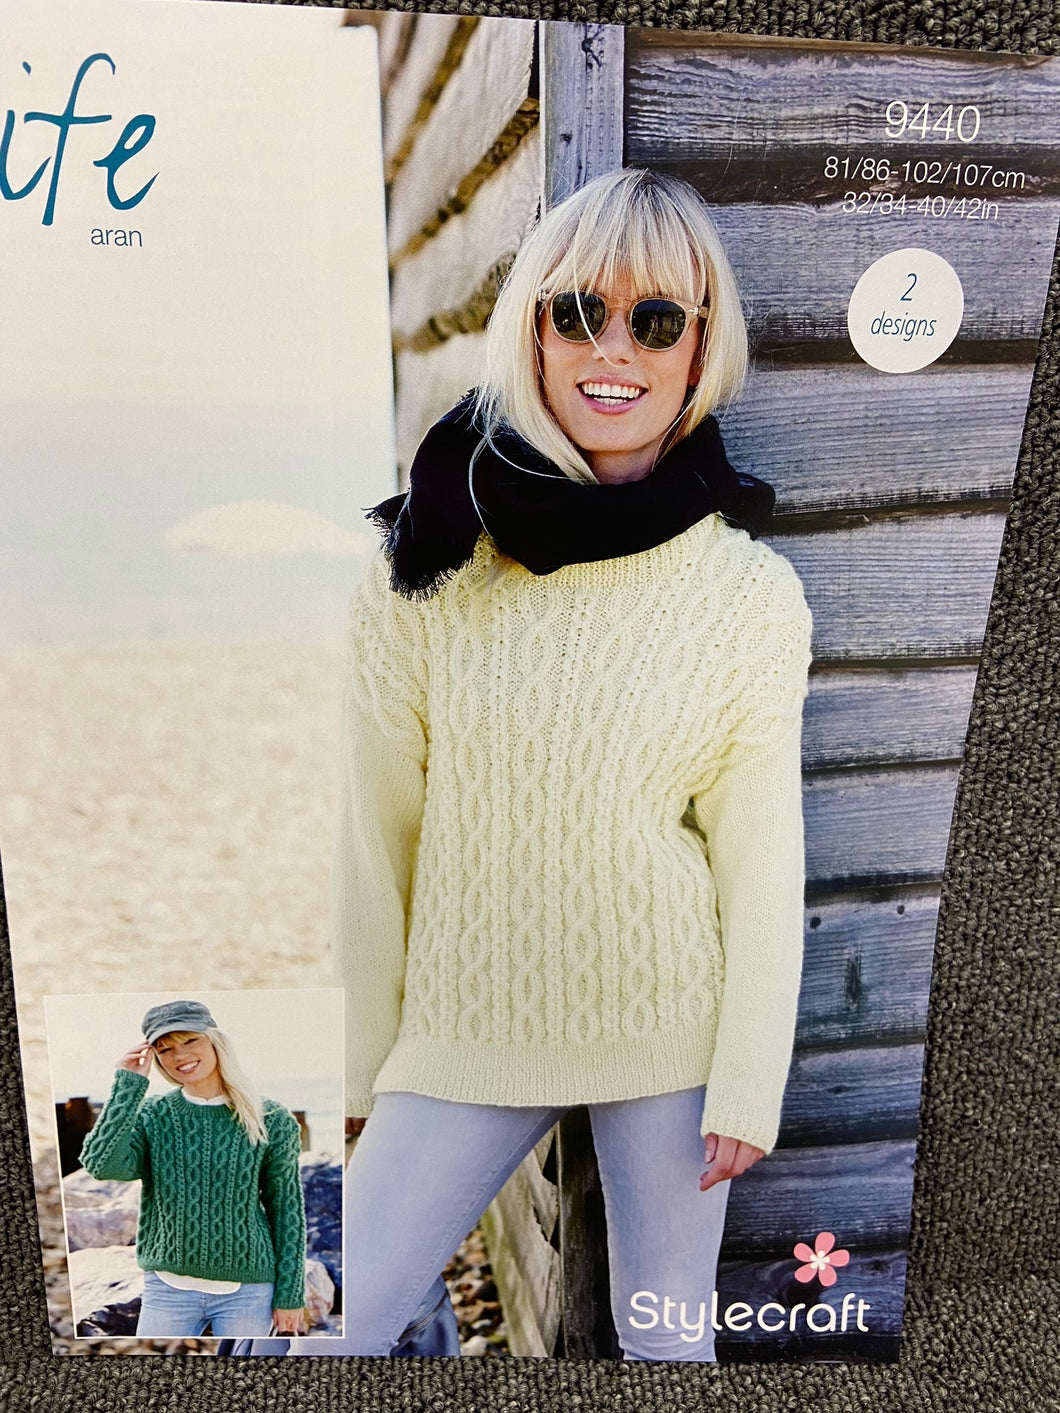 stylecraft life aran ladies jumpers sweaters 9440 knitting pattern fabric shack malmesbury wool yarn knit